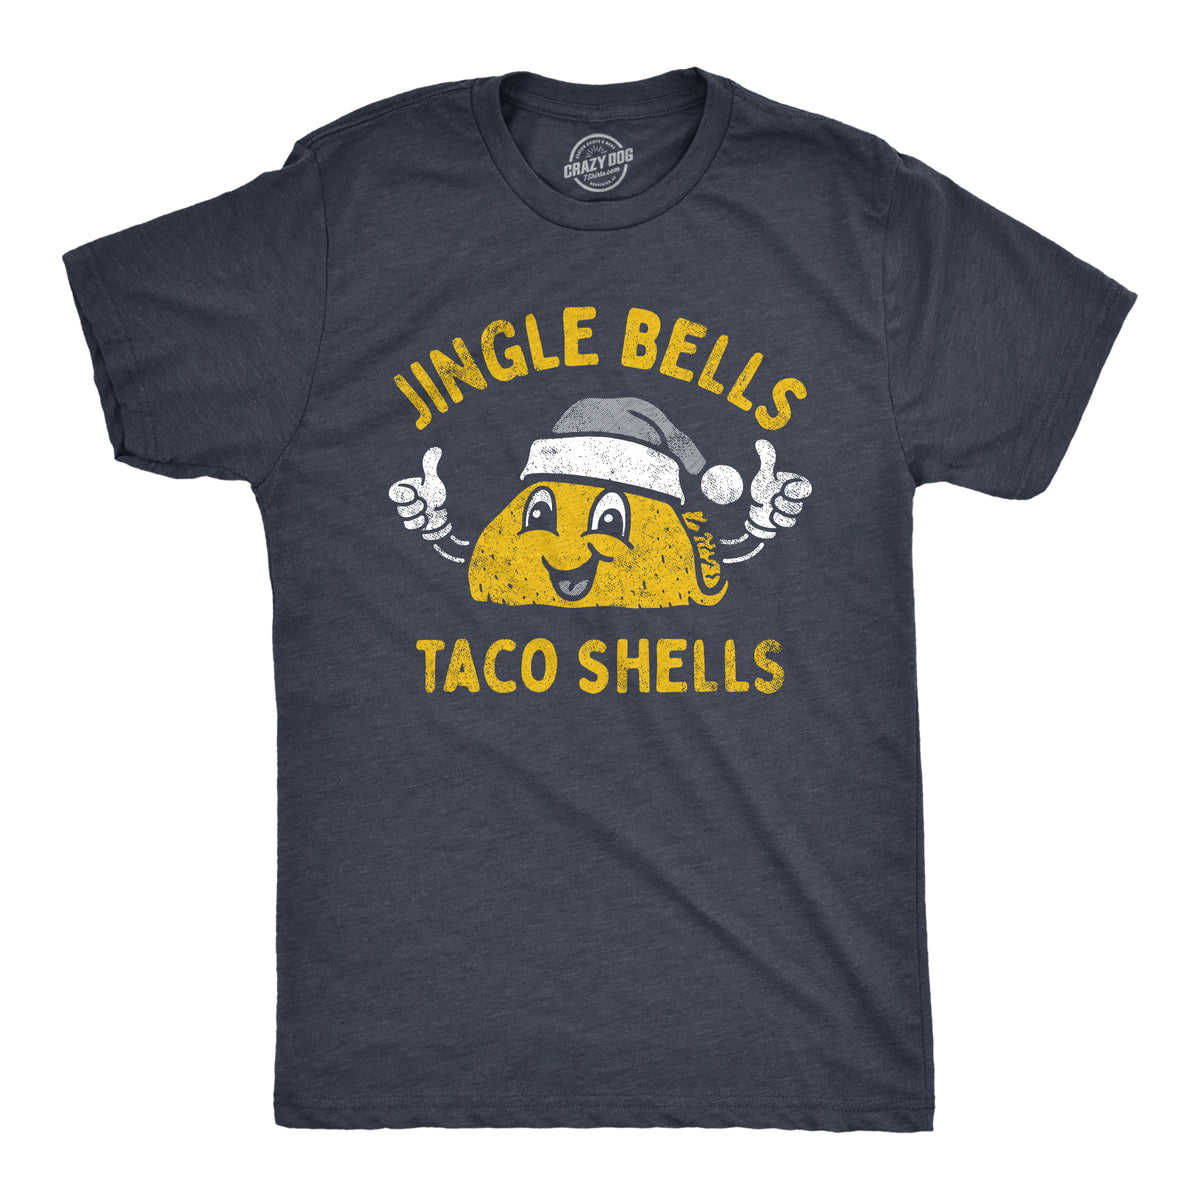 Funny Heather Navy - JINGLE Jingle Bells Taco Shells Mens T Shirt Nerdy Christmas Food Tee